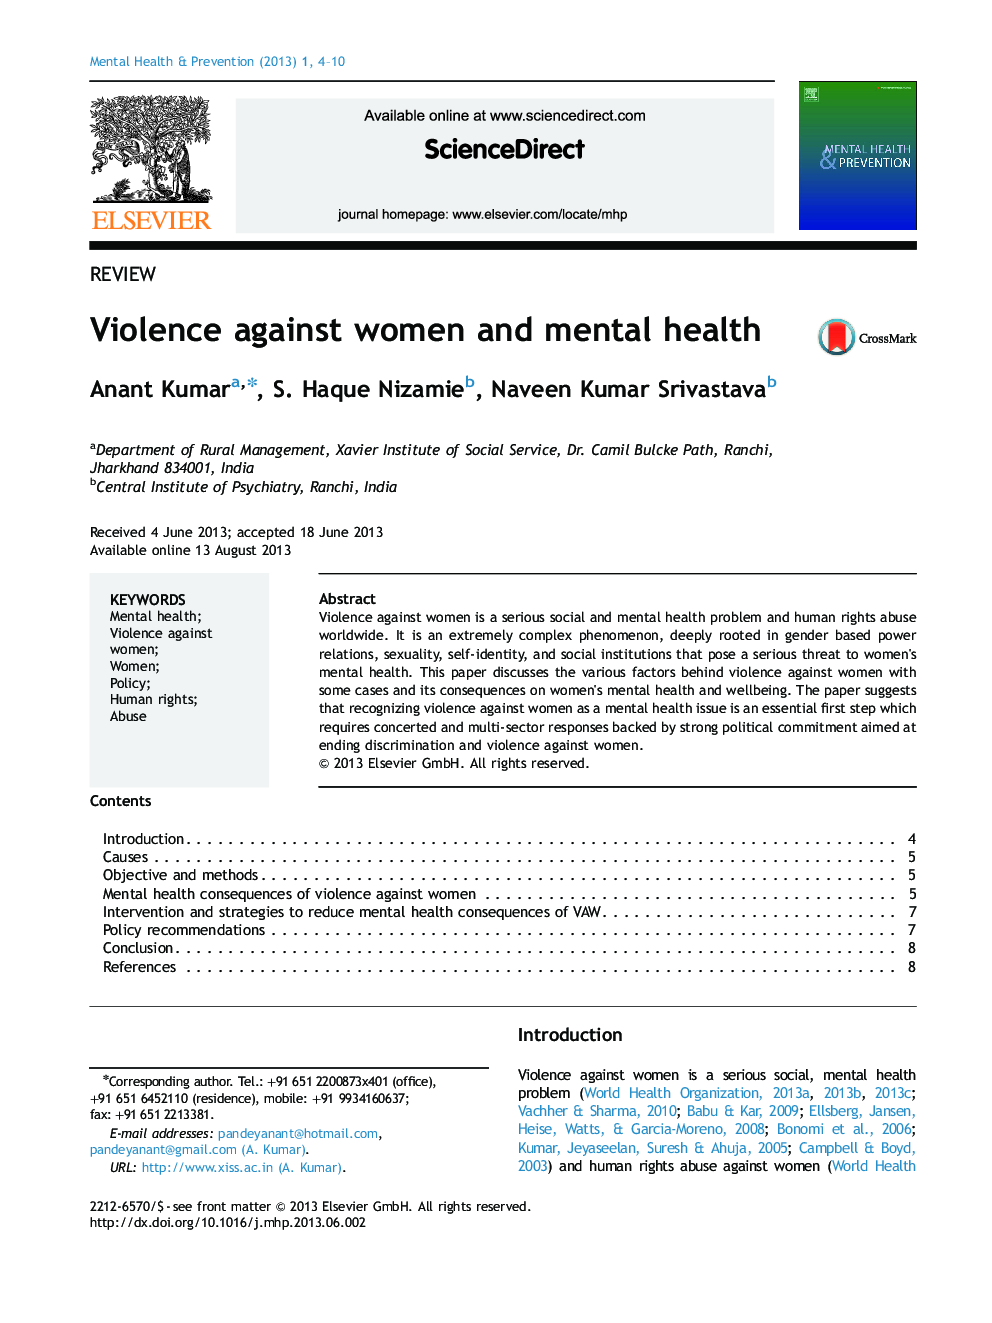 خشونت علیه زنان و سلامت روانی